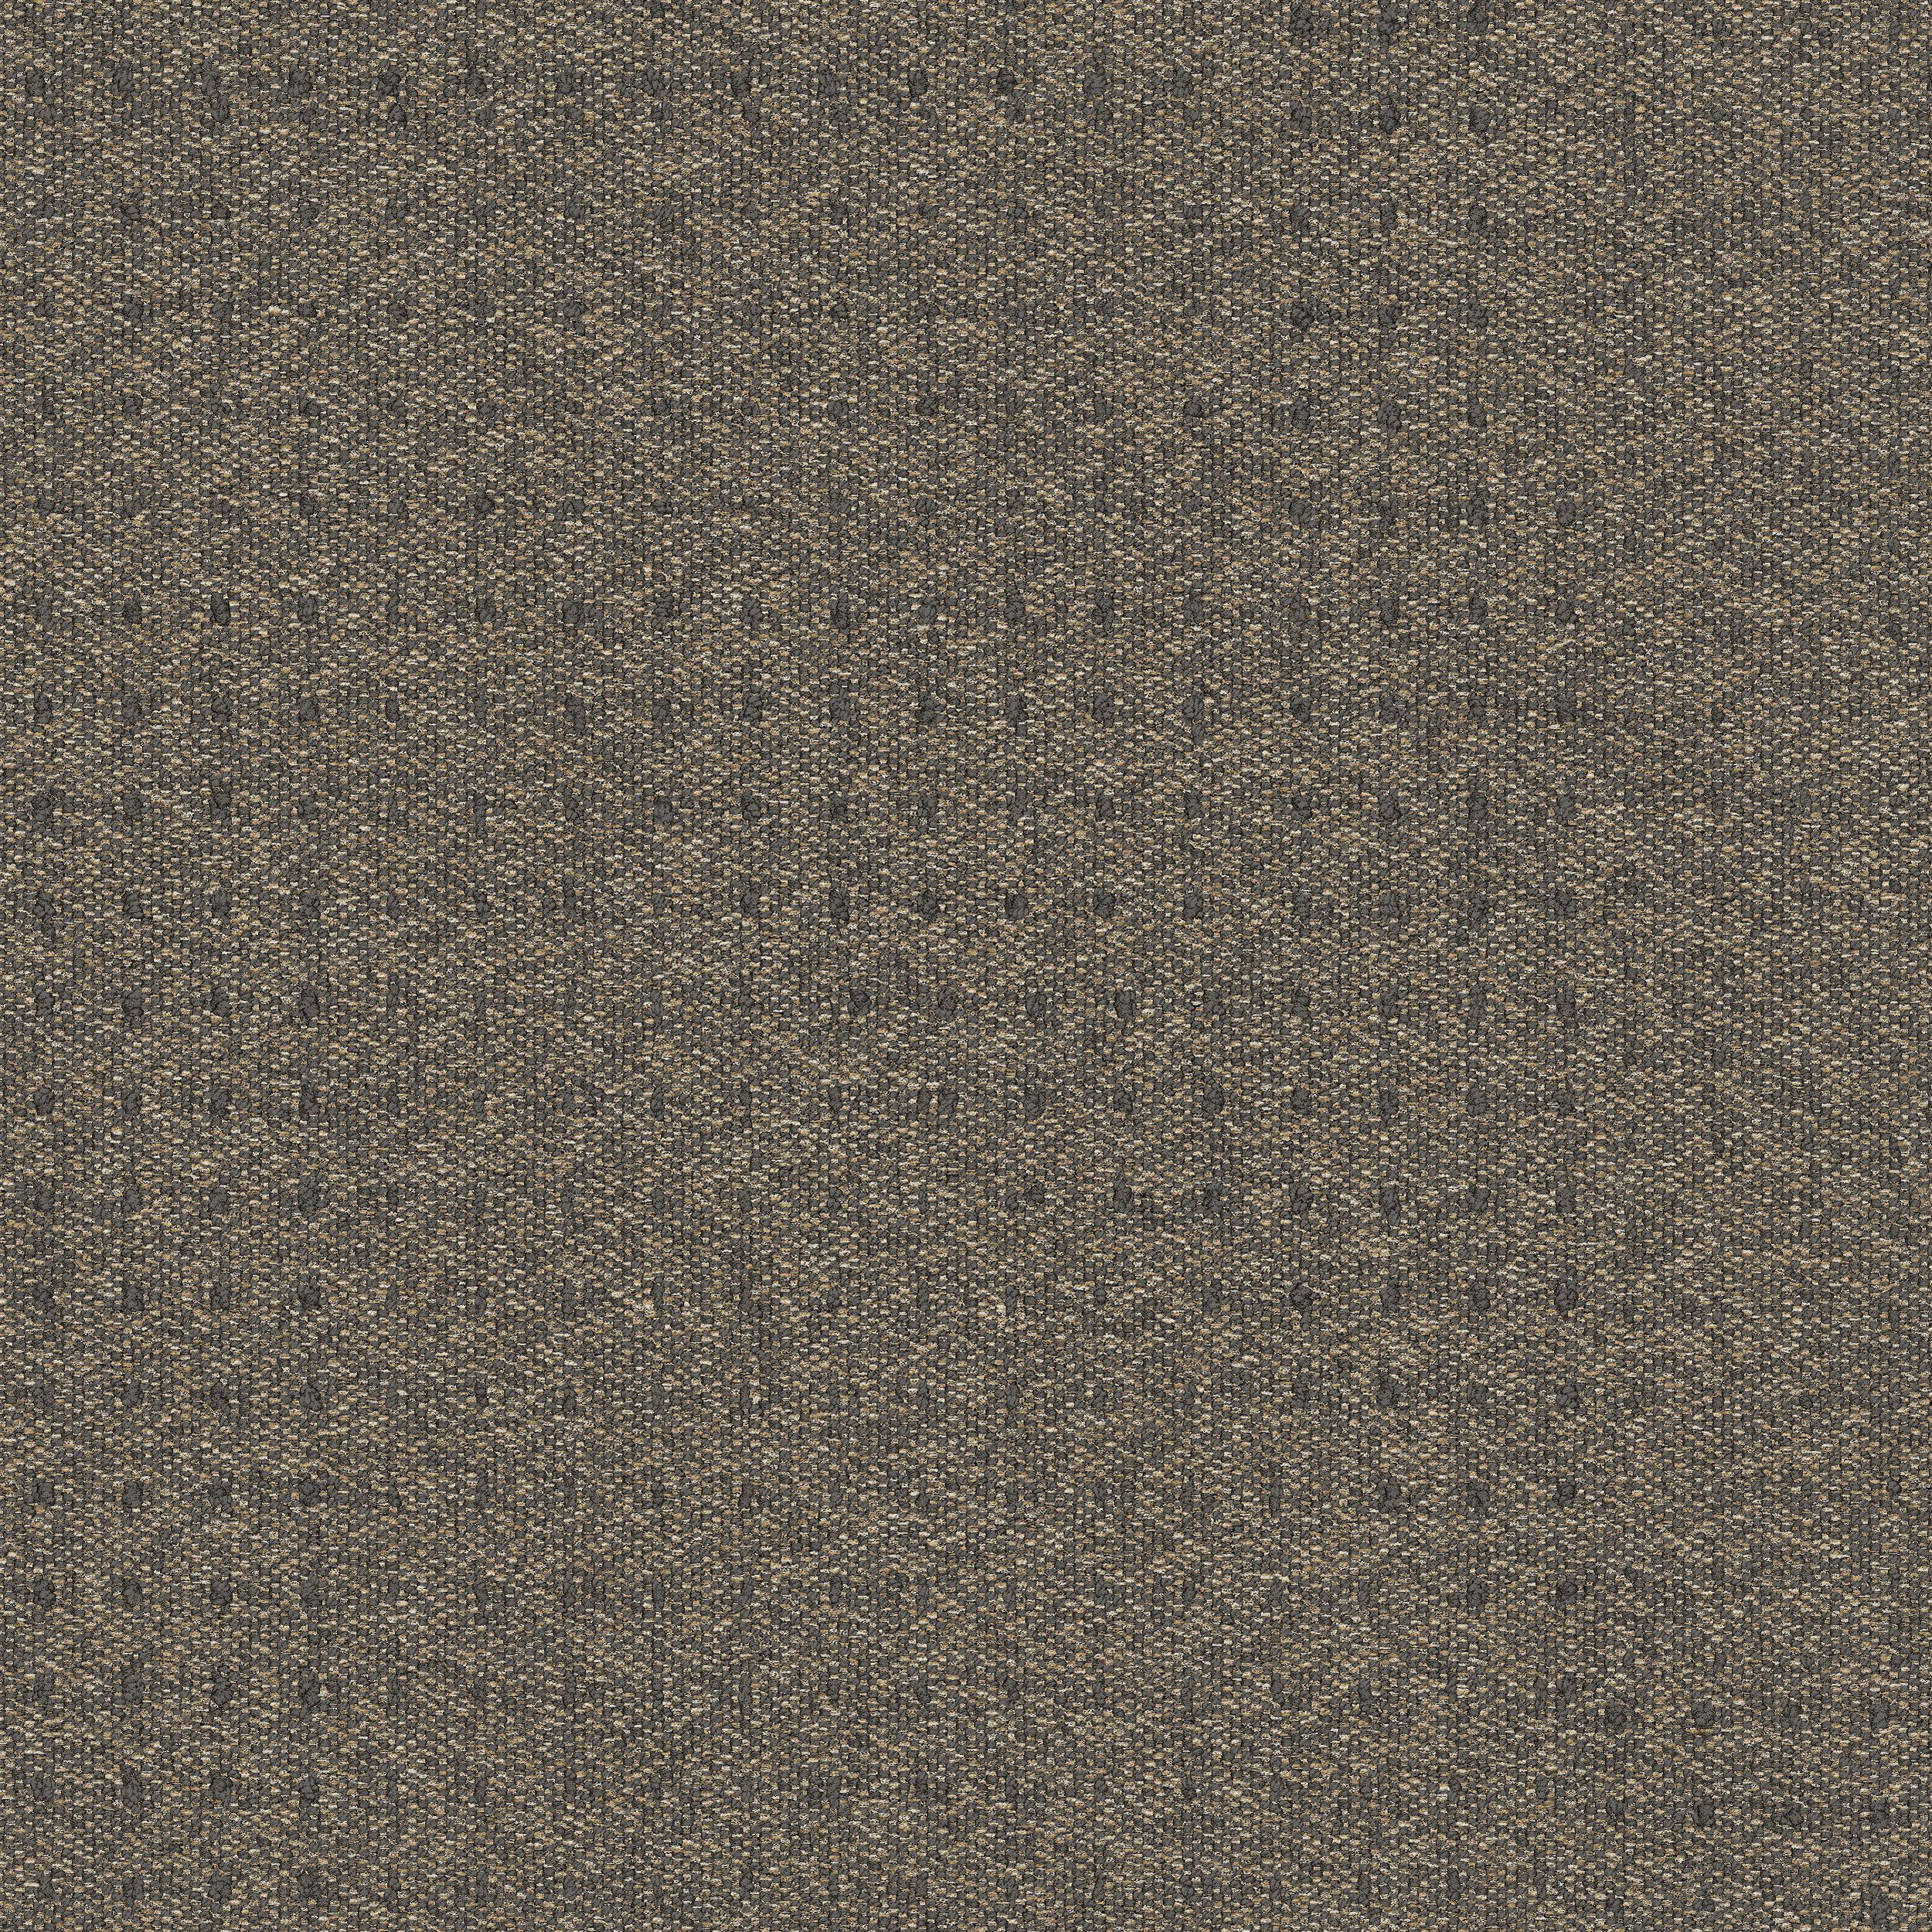 Dover Street Carpet Tile In Concrete Dot número de imagen 2